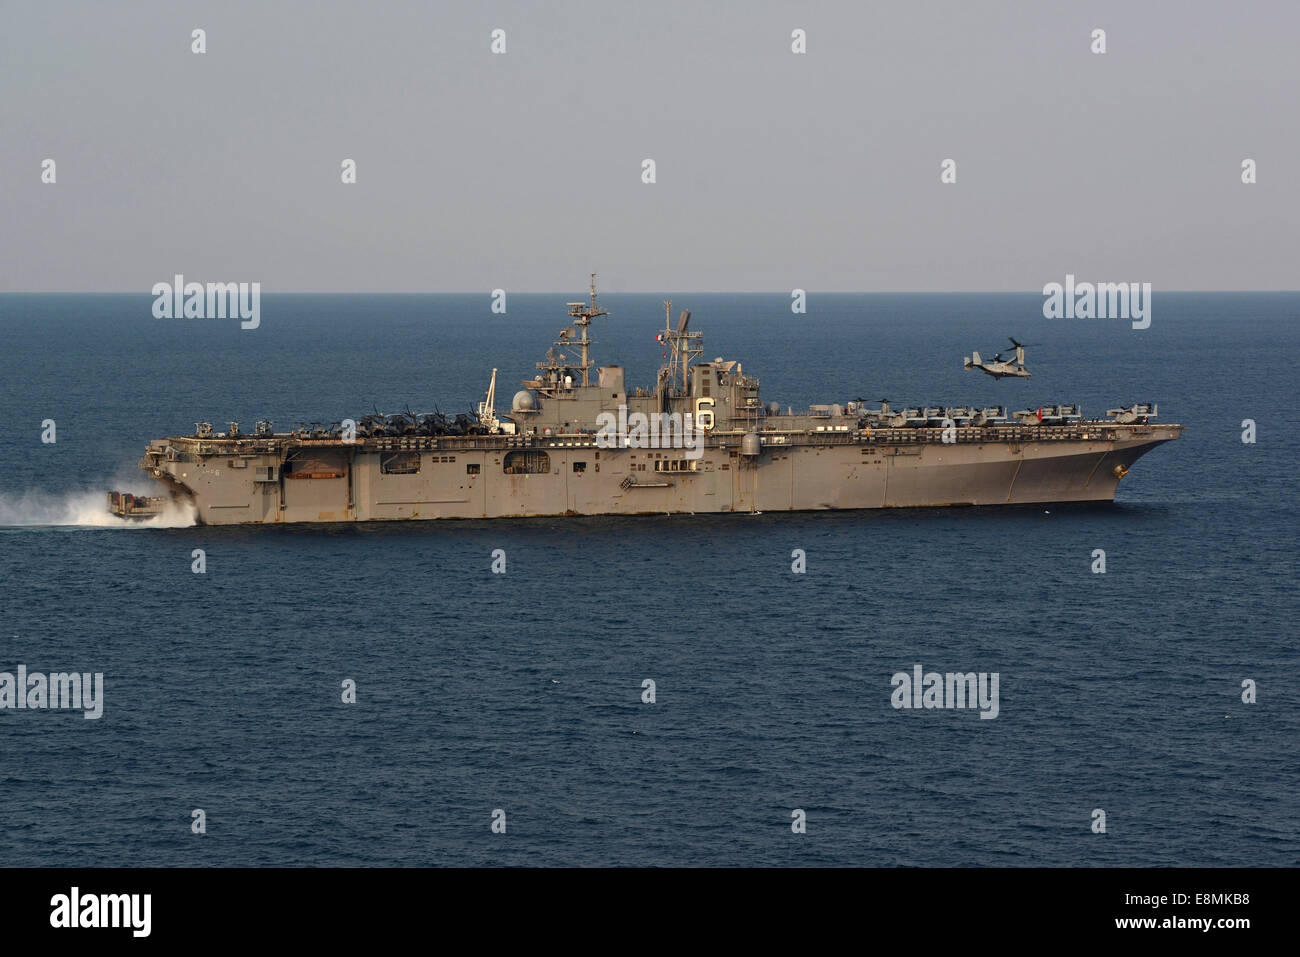 April 11, 2014 - The amphibious assault ship USS Bonhomme Richard (LHD 6) conducts amphibious operations while transiting the Ea Stock Photo